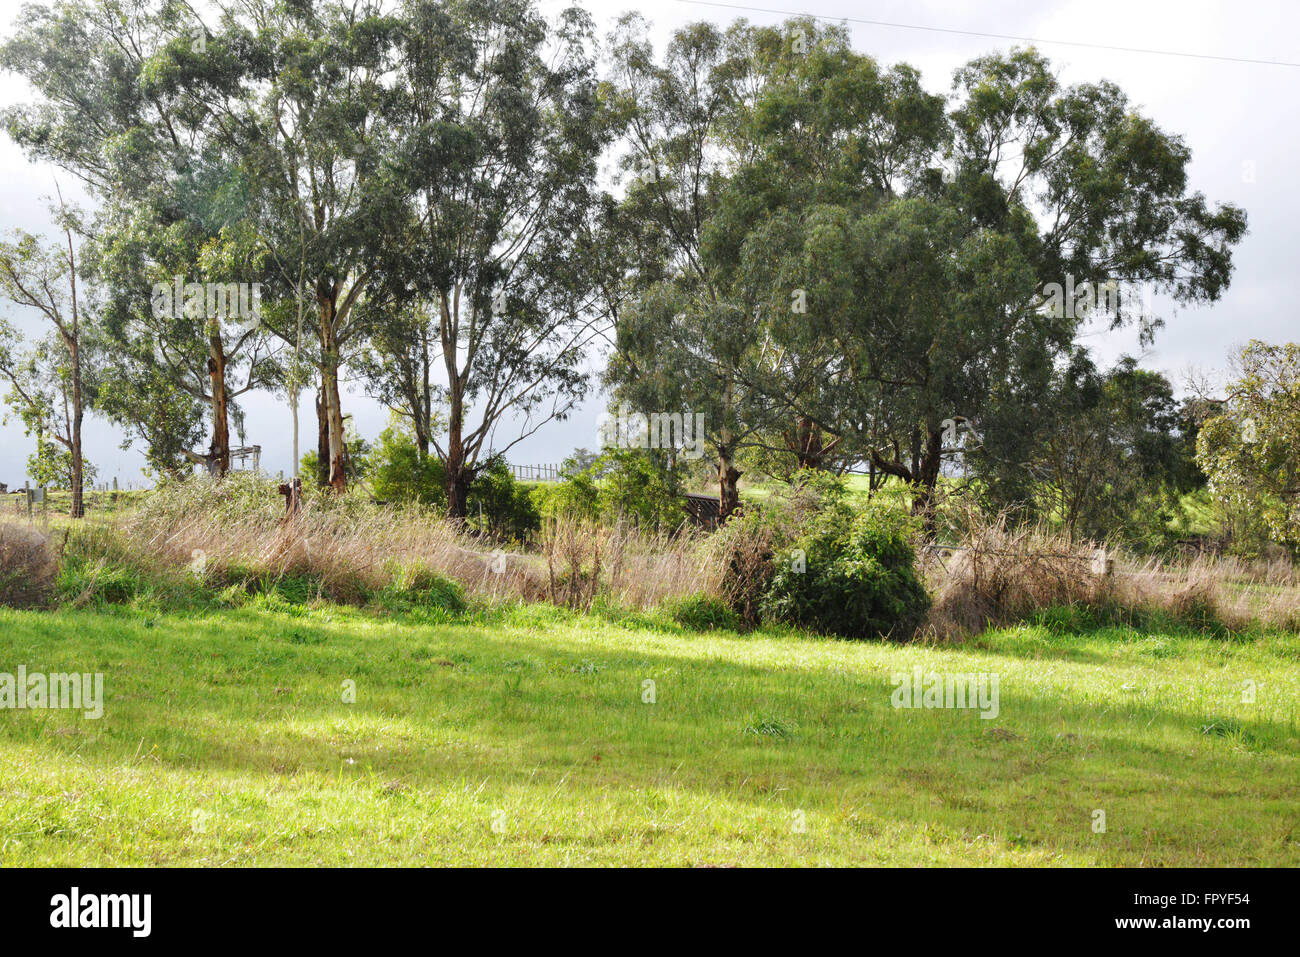 Scene in Rural Australia with Gum Trees Stock Photo